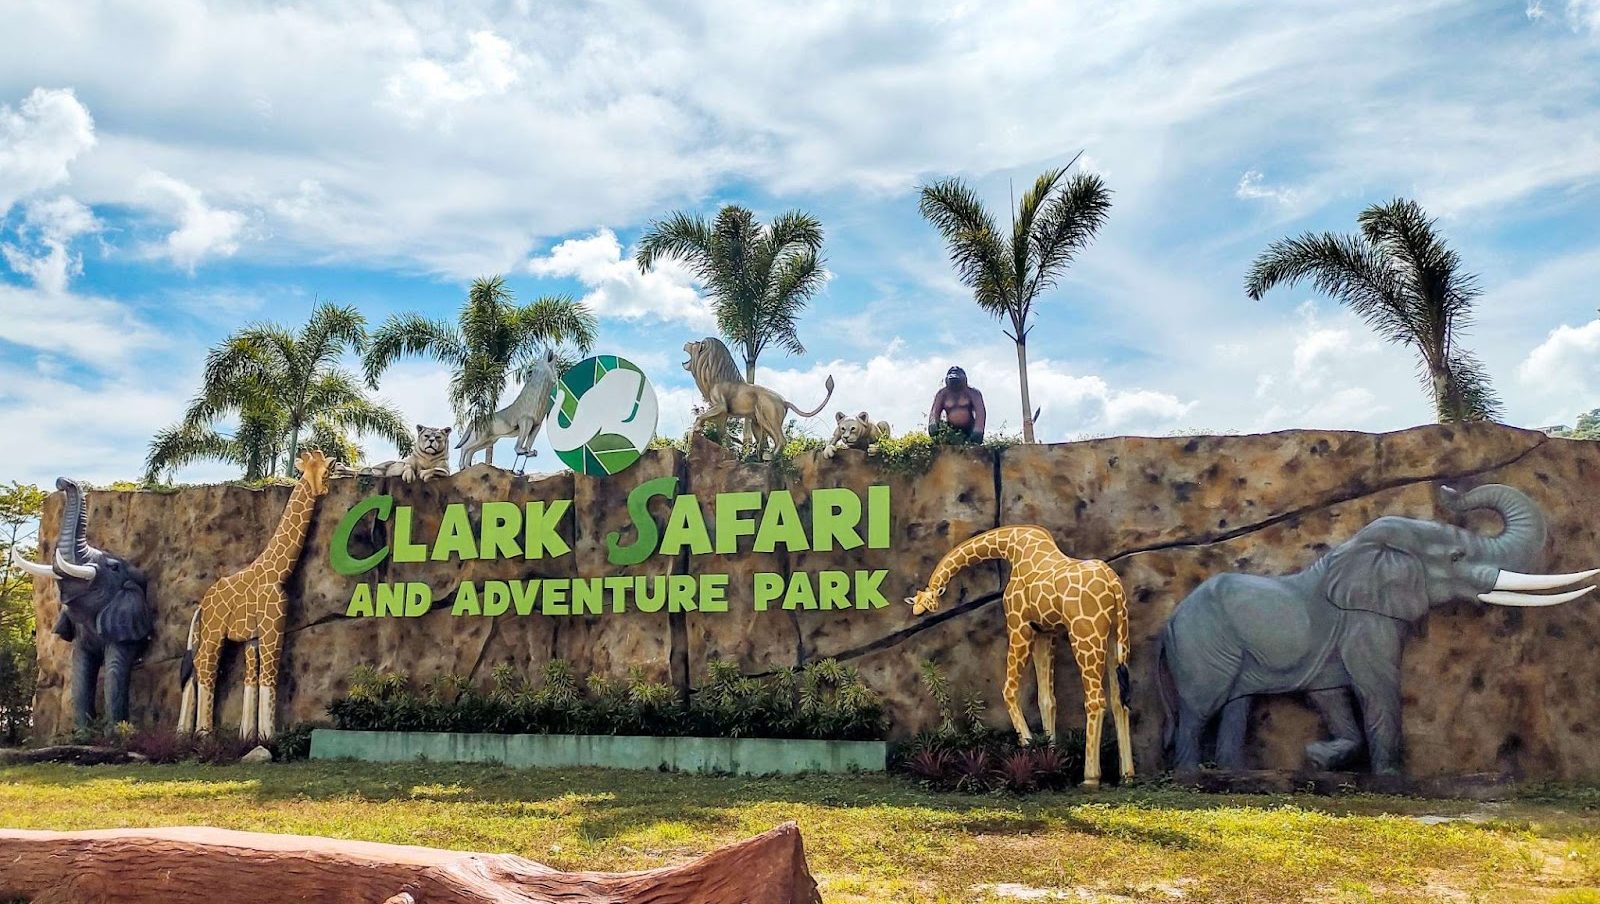 safari activity park (safari adventure park) services